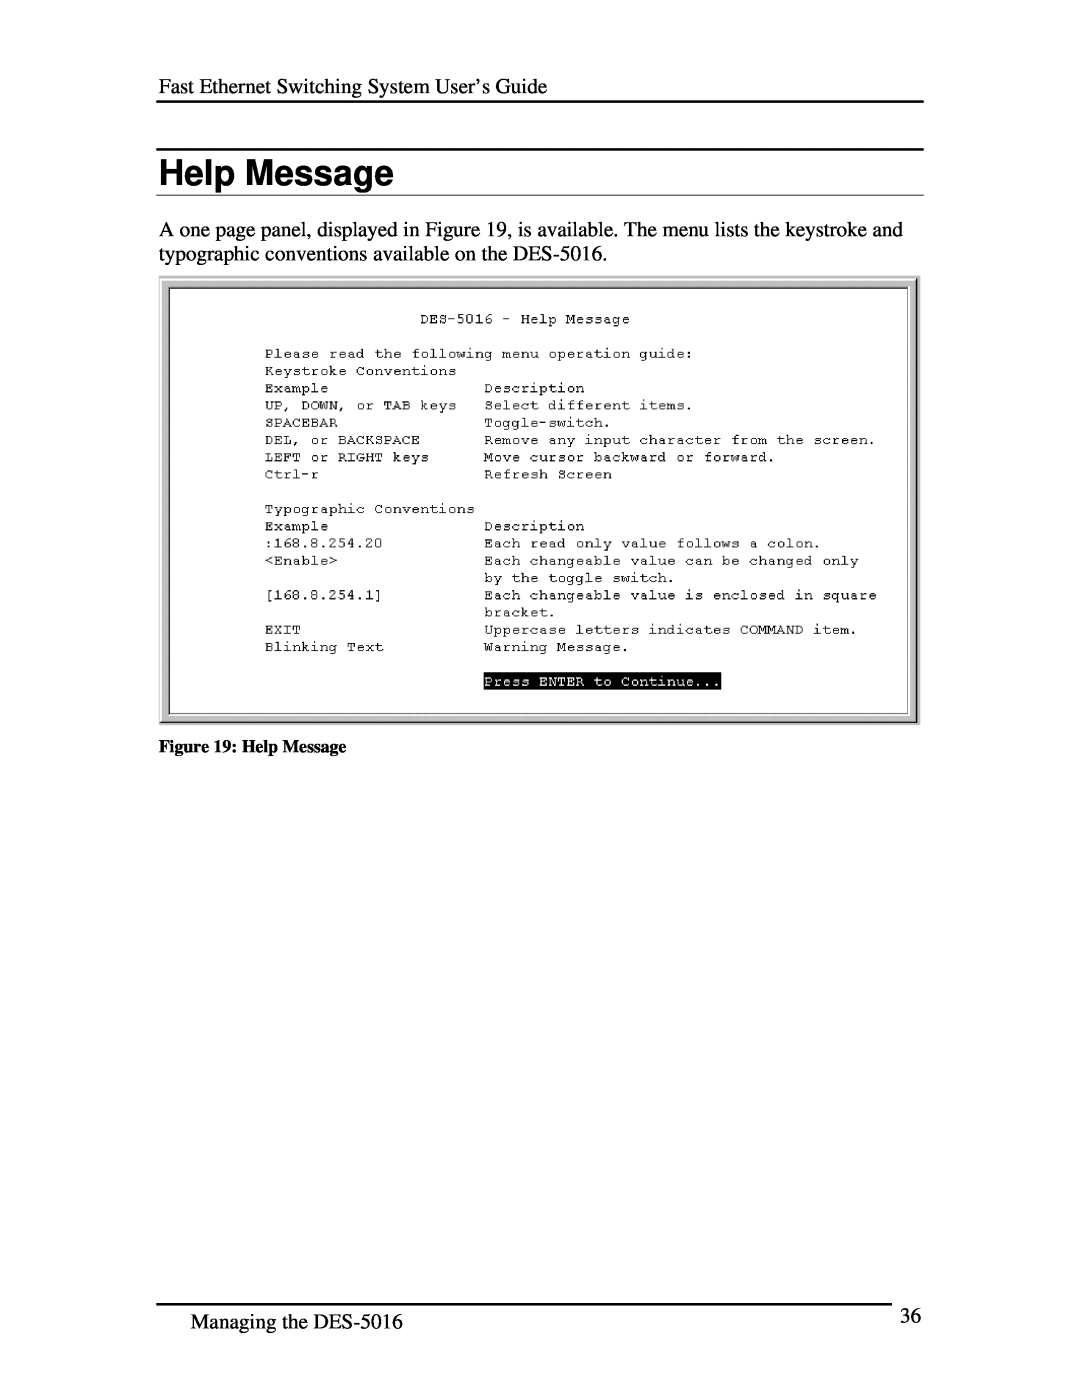 D-Link DES-5016 manual Help Message 